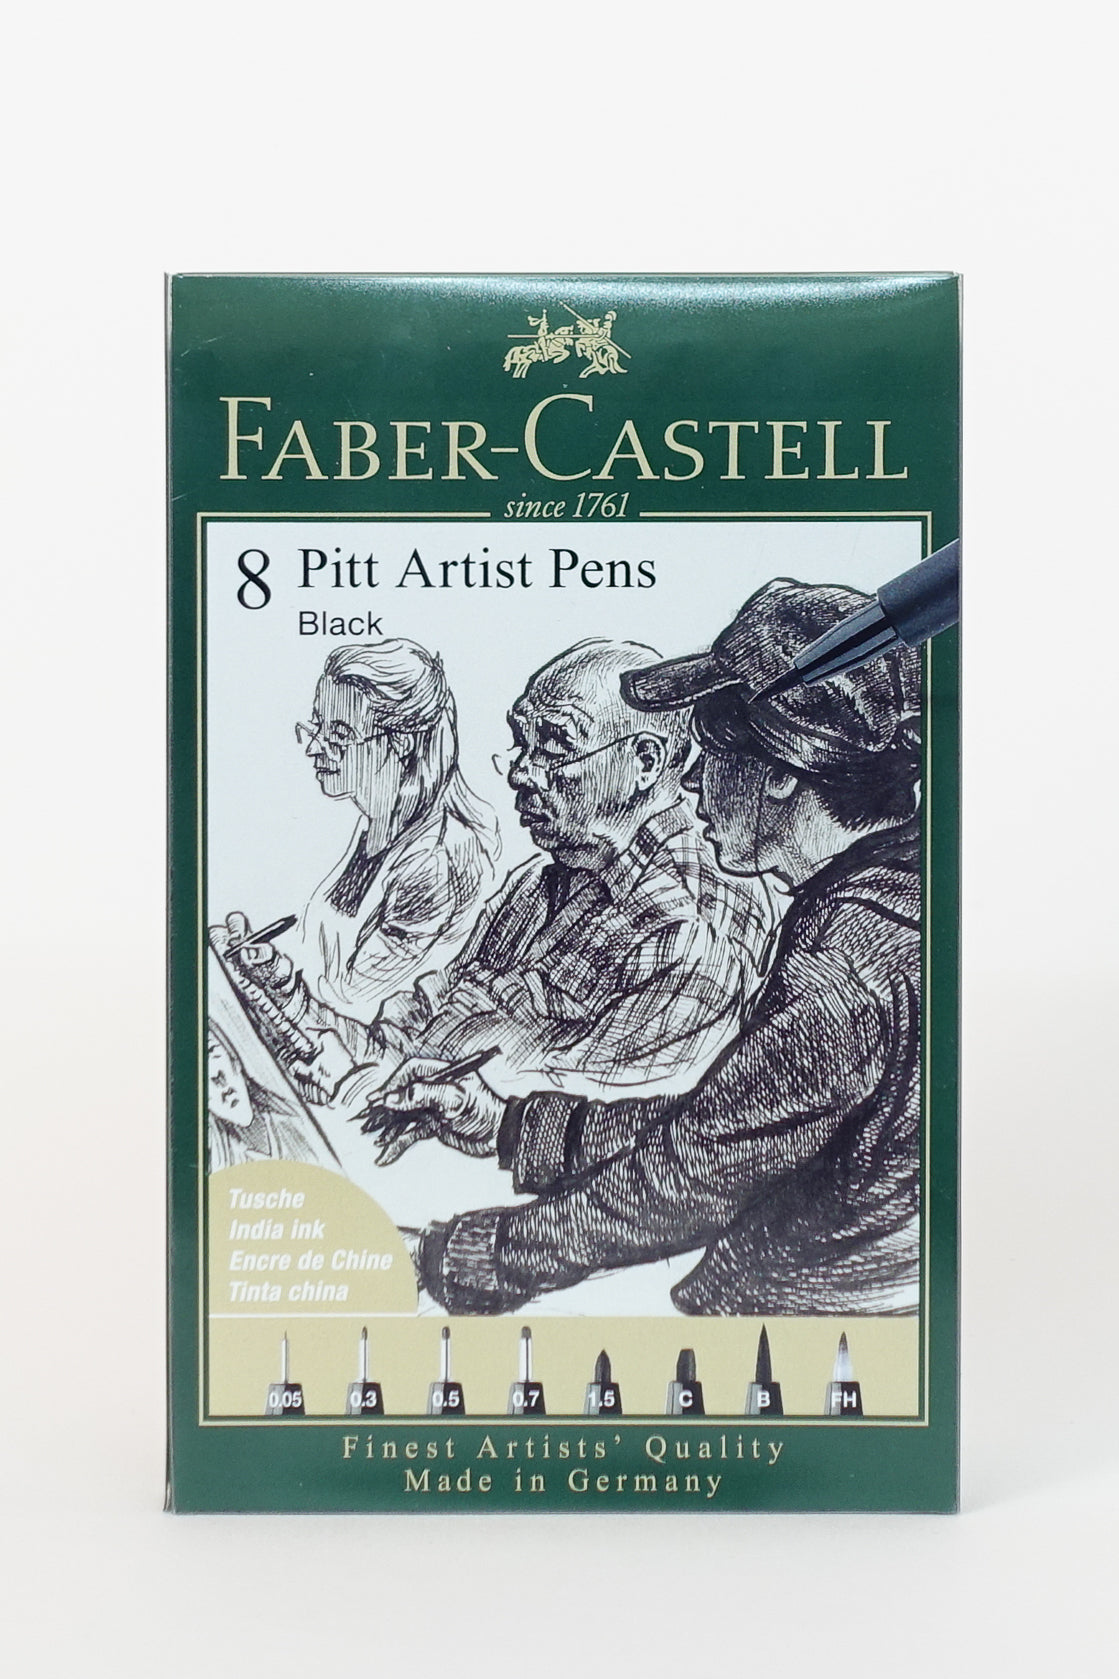 Faber-Castell 8 Pitt Artist Pens - Black